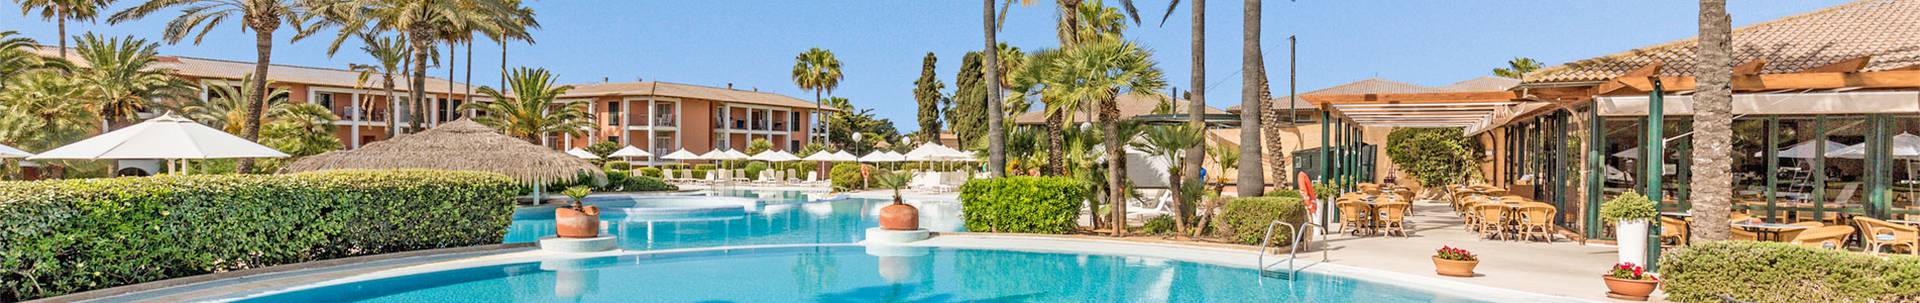 Blau hotels - Mallorca - 